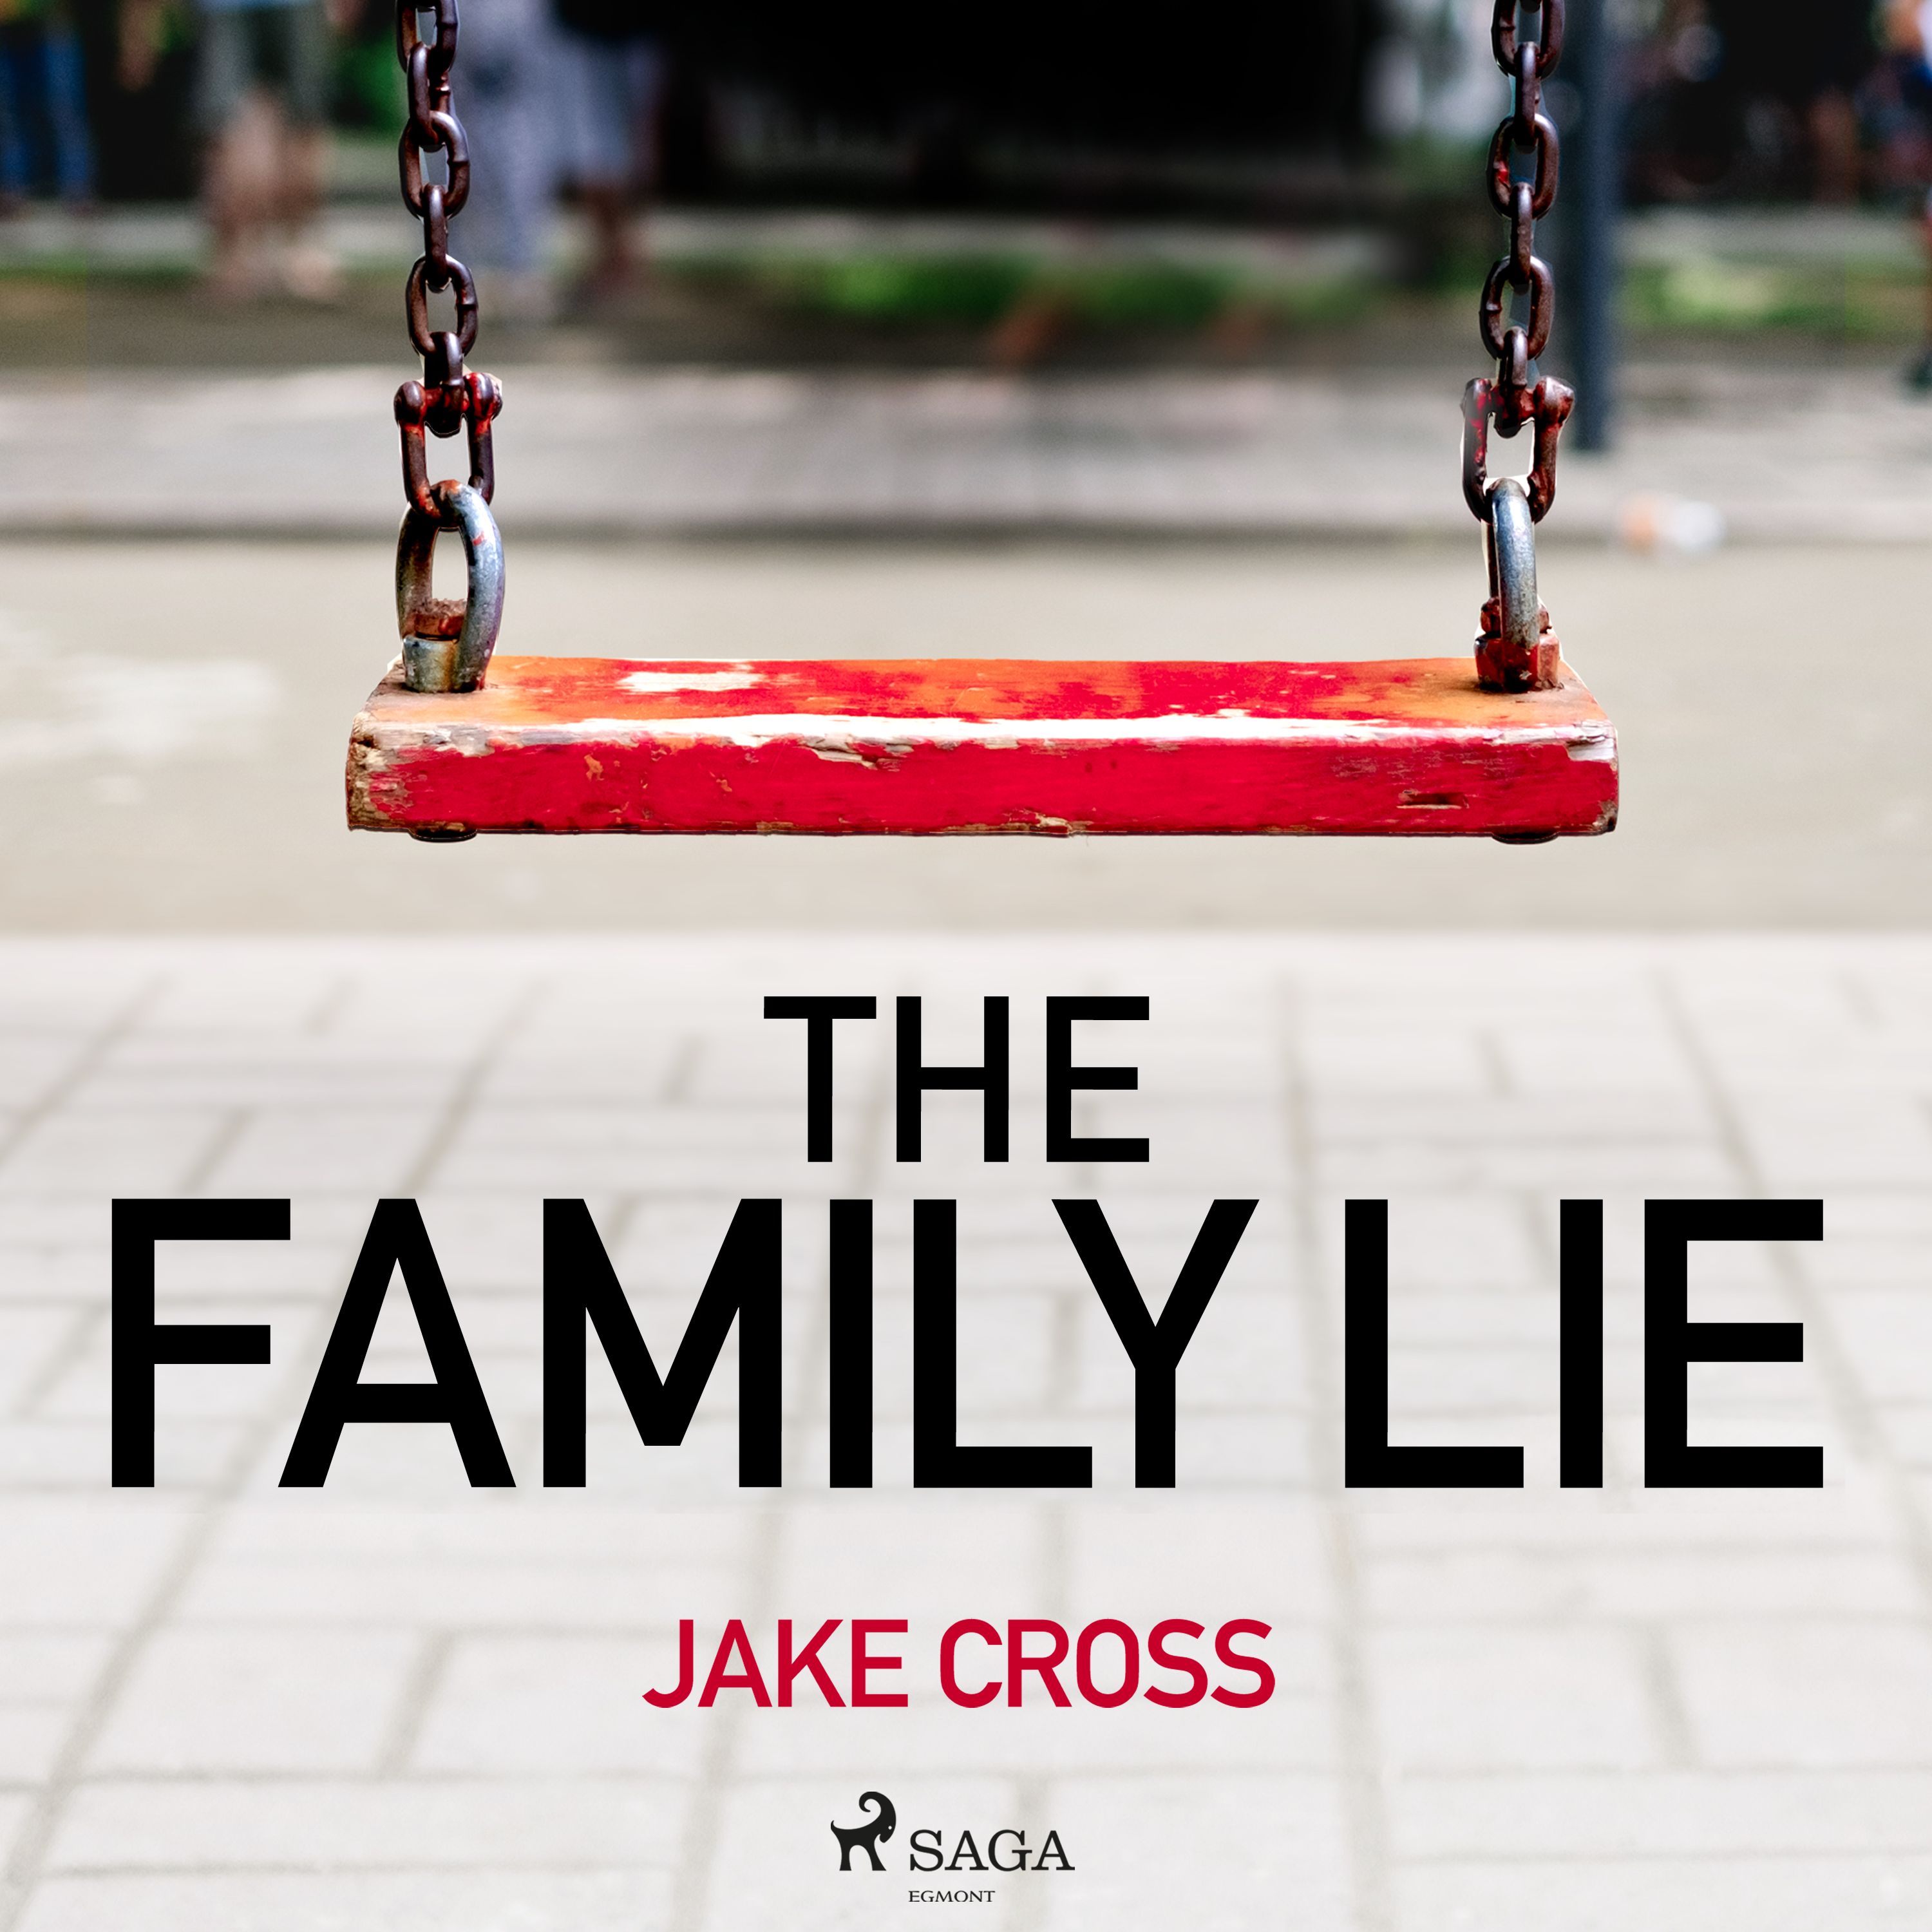 The Family Lie, ljudbok av Jake Cross